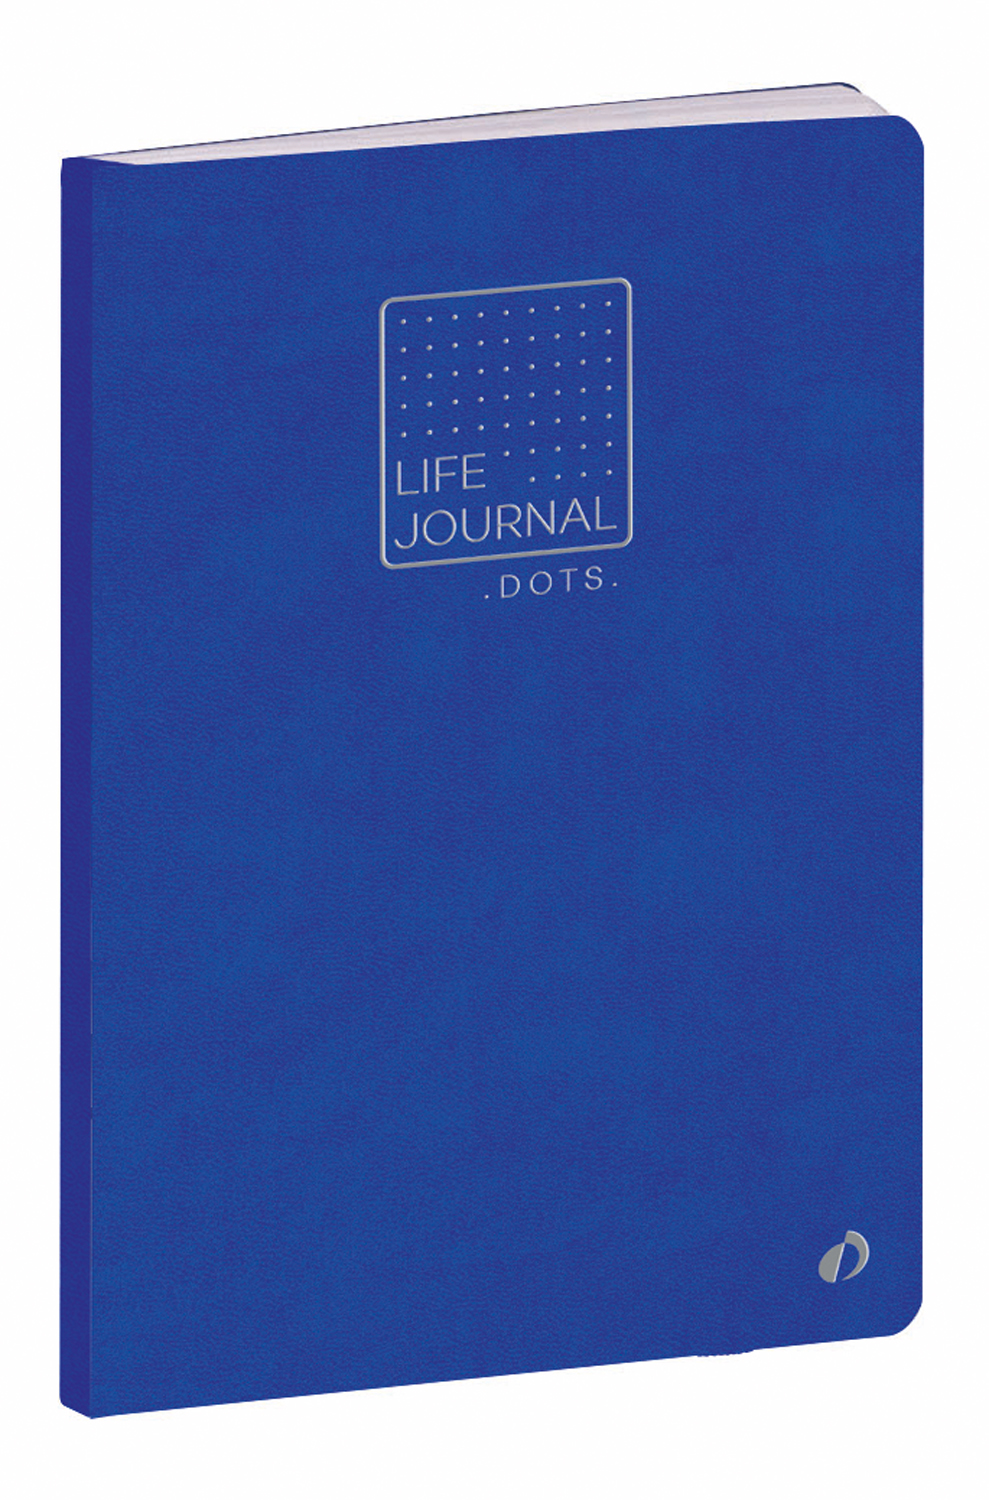 Nos carnets à points/dots Life Journal – Quo Vadis